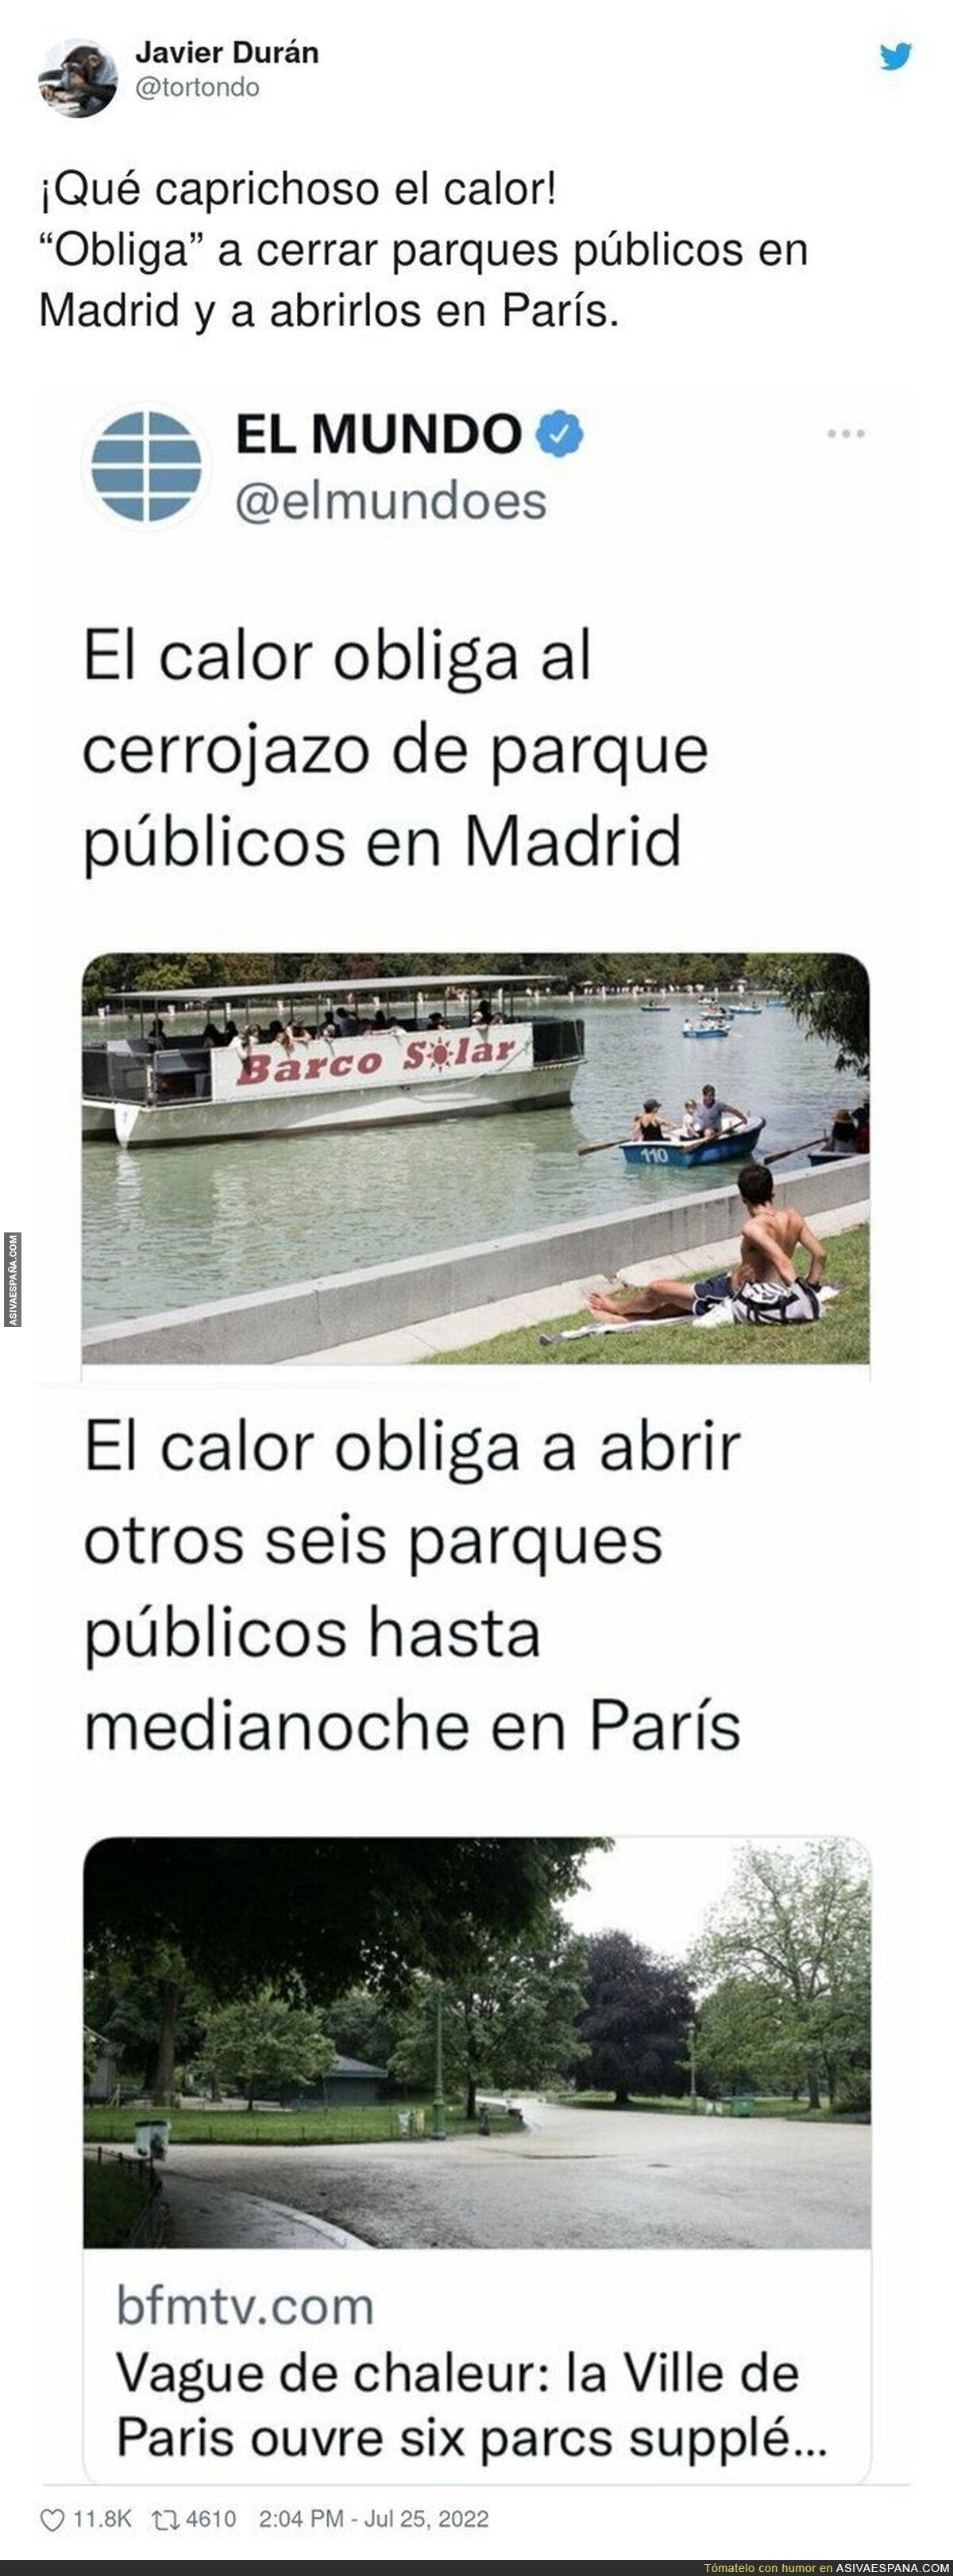 El Sol manda en Madrid